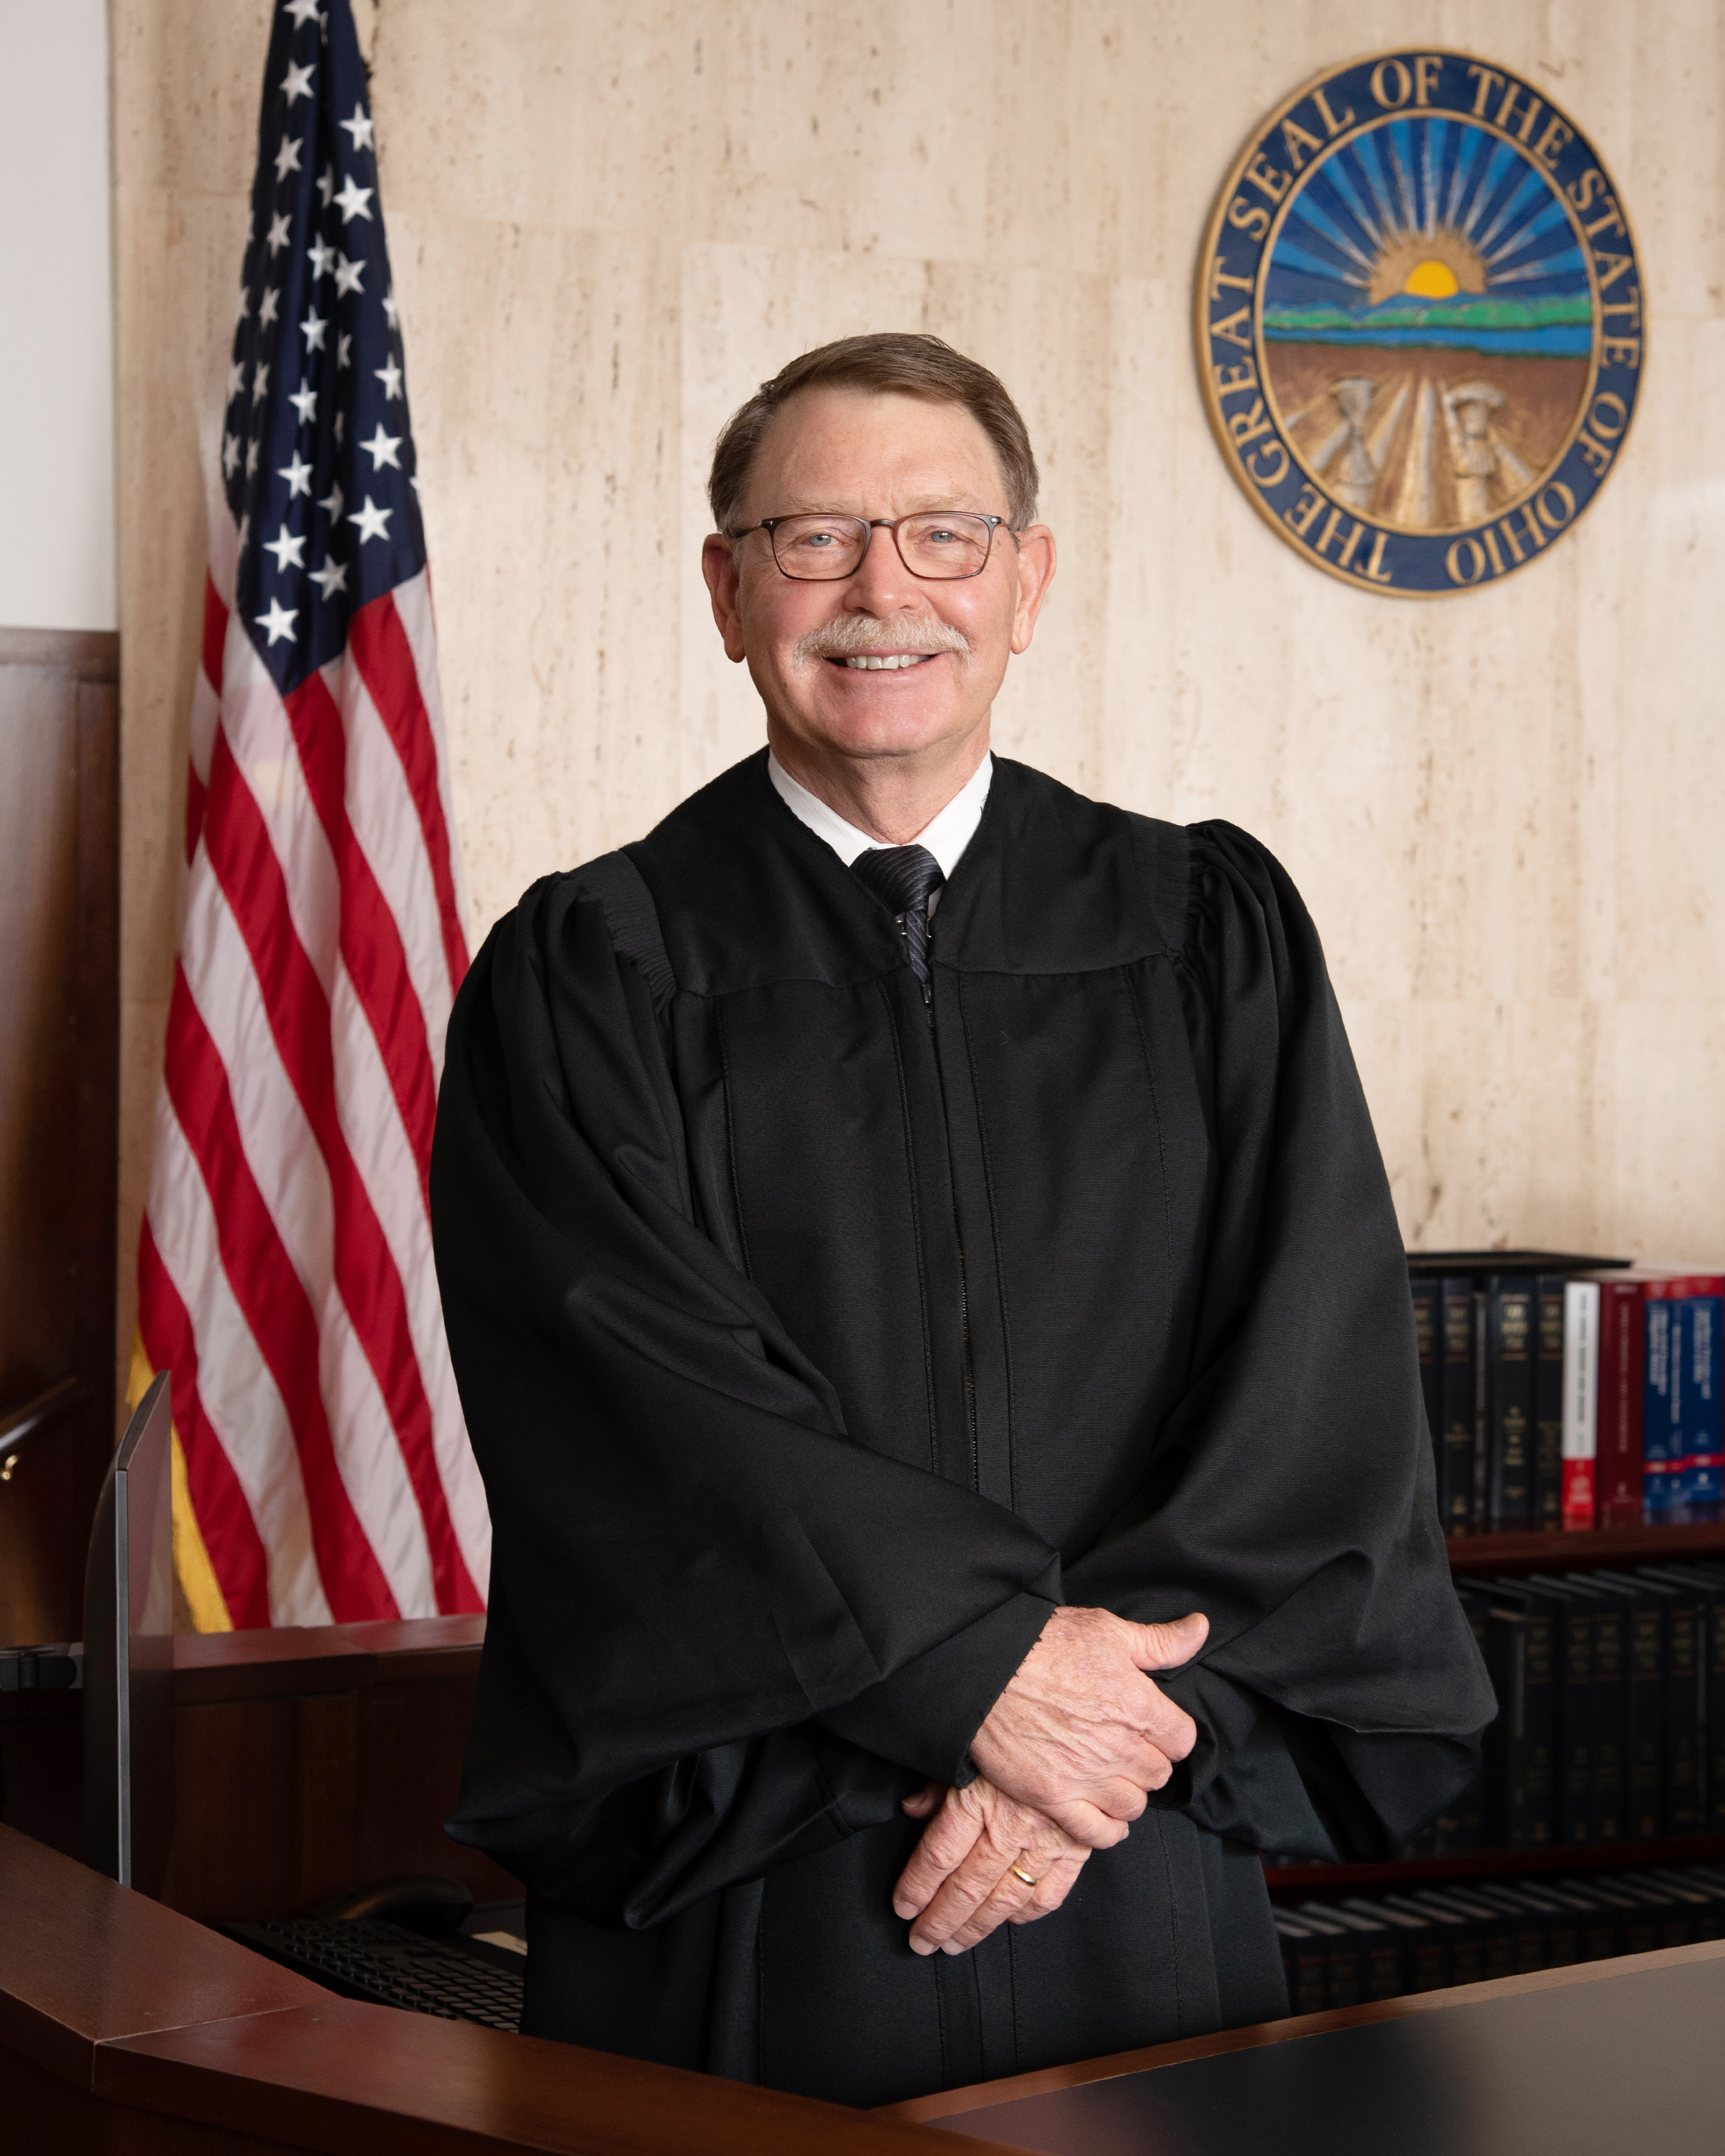 Judge Jeffrey M. Welbaum